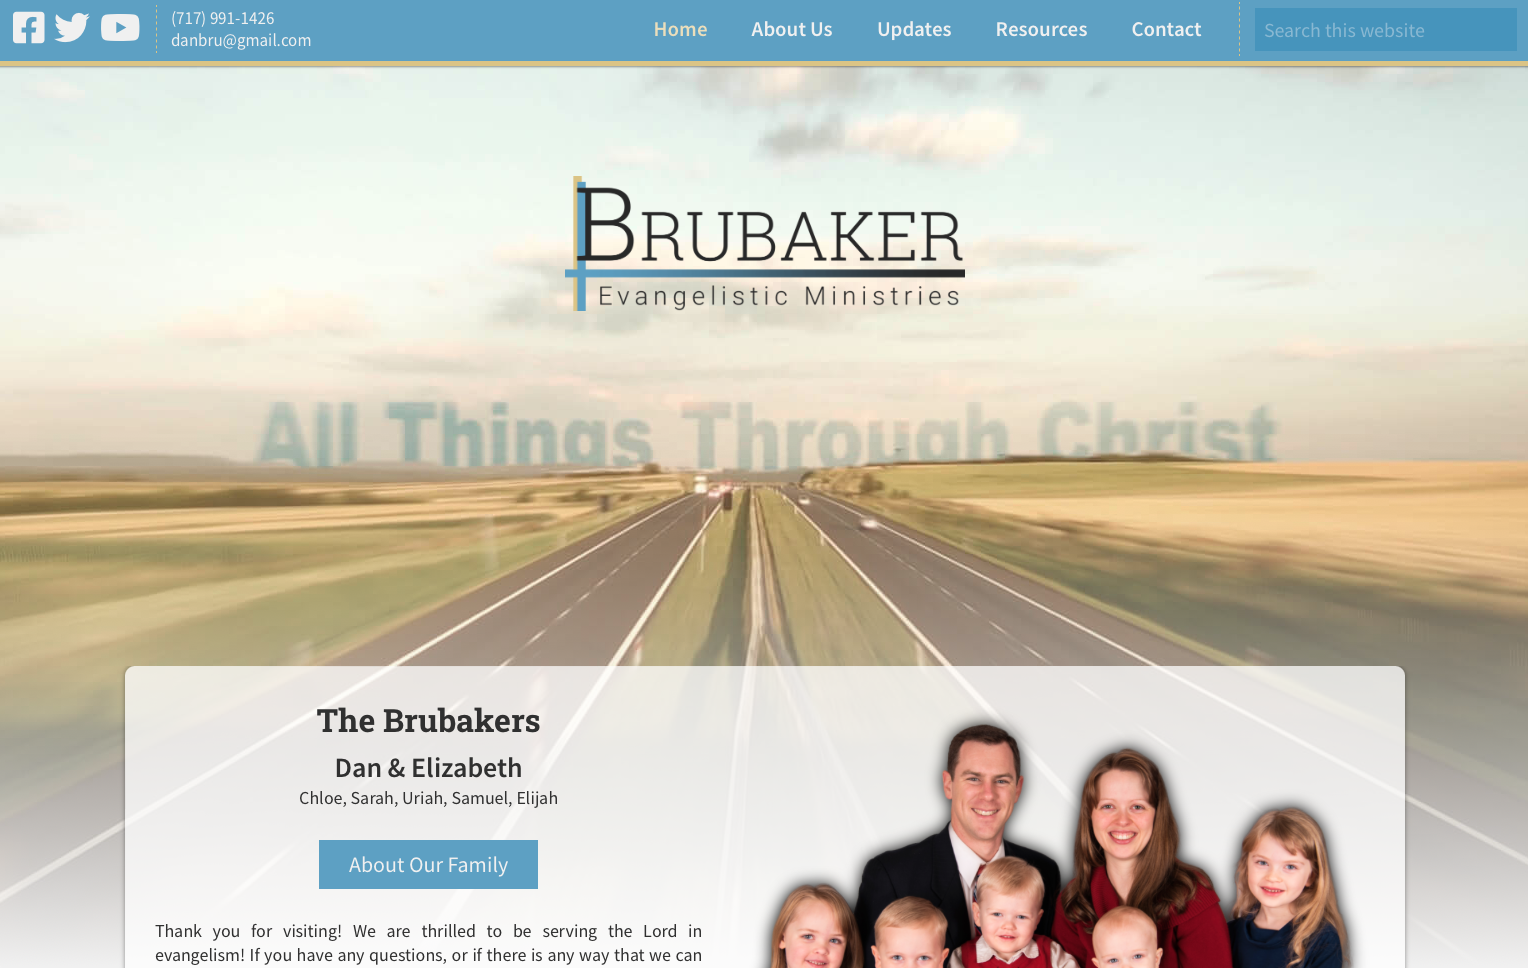 Brubaker Evangelistic Ministries